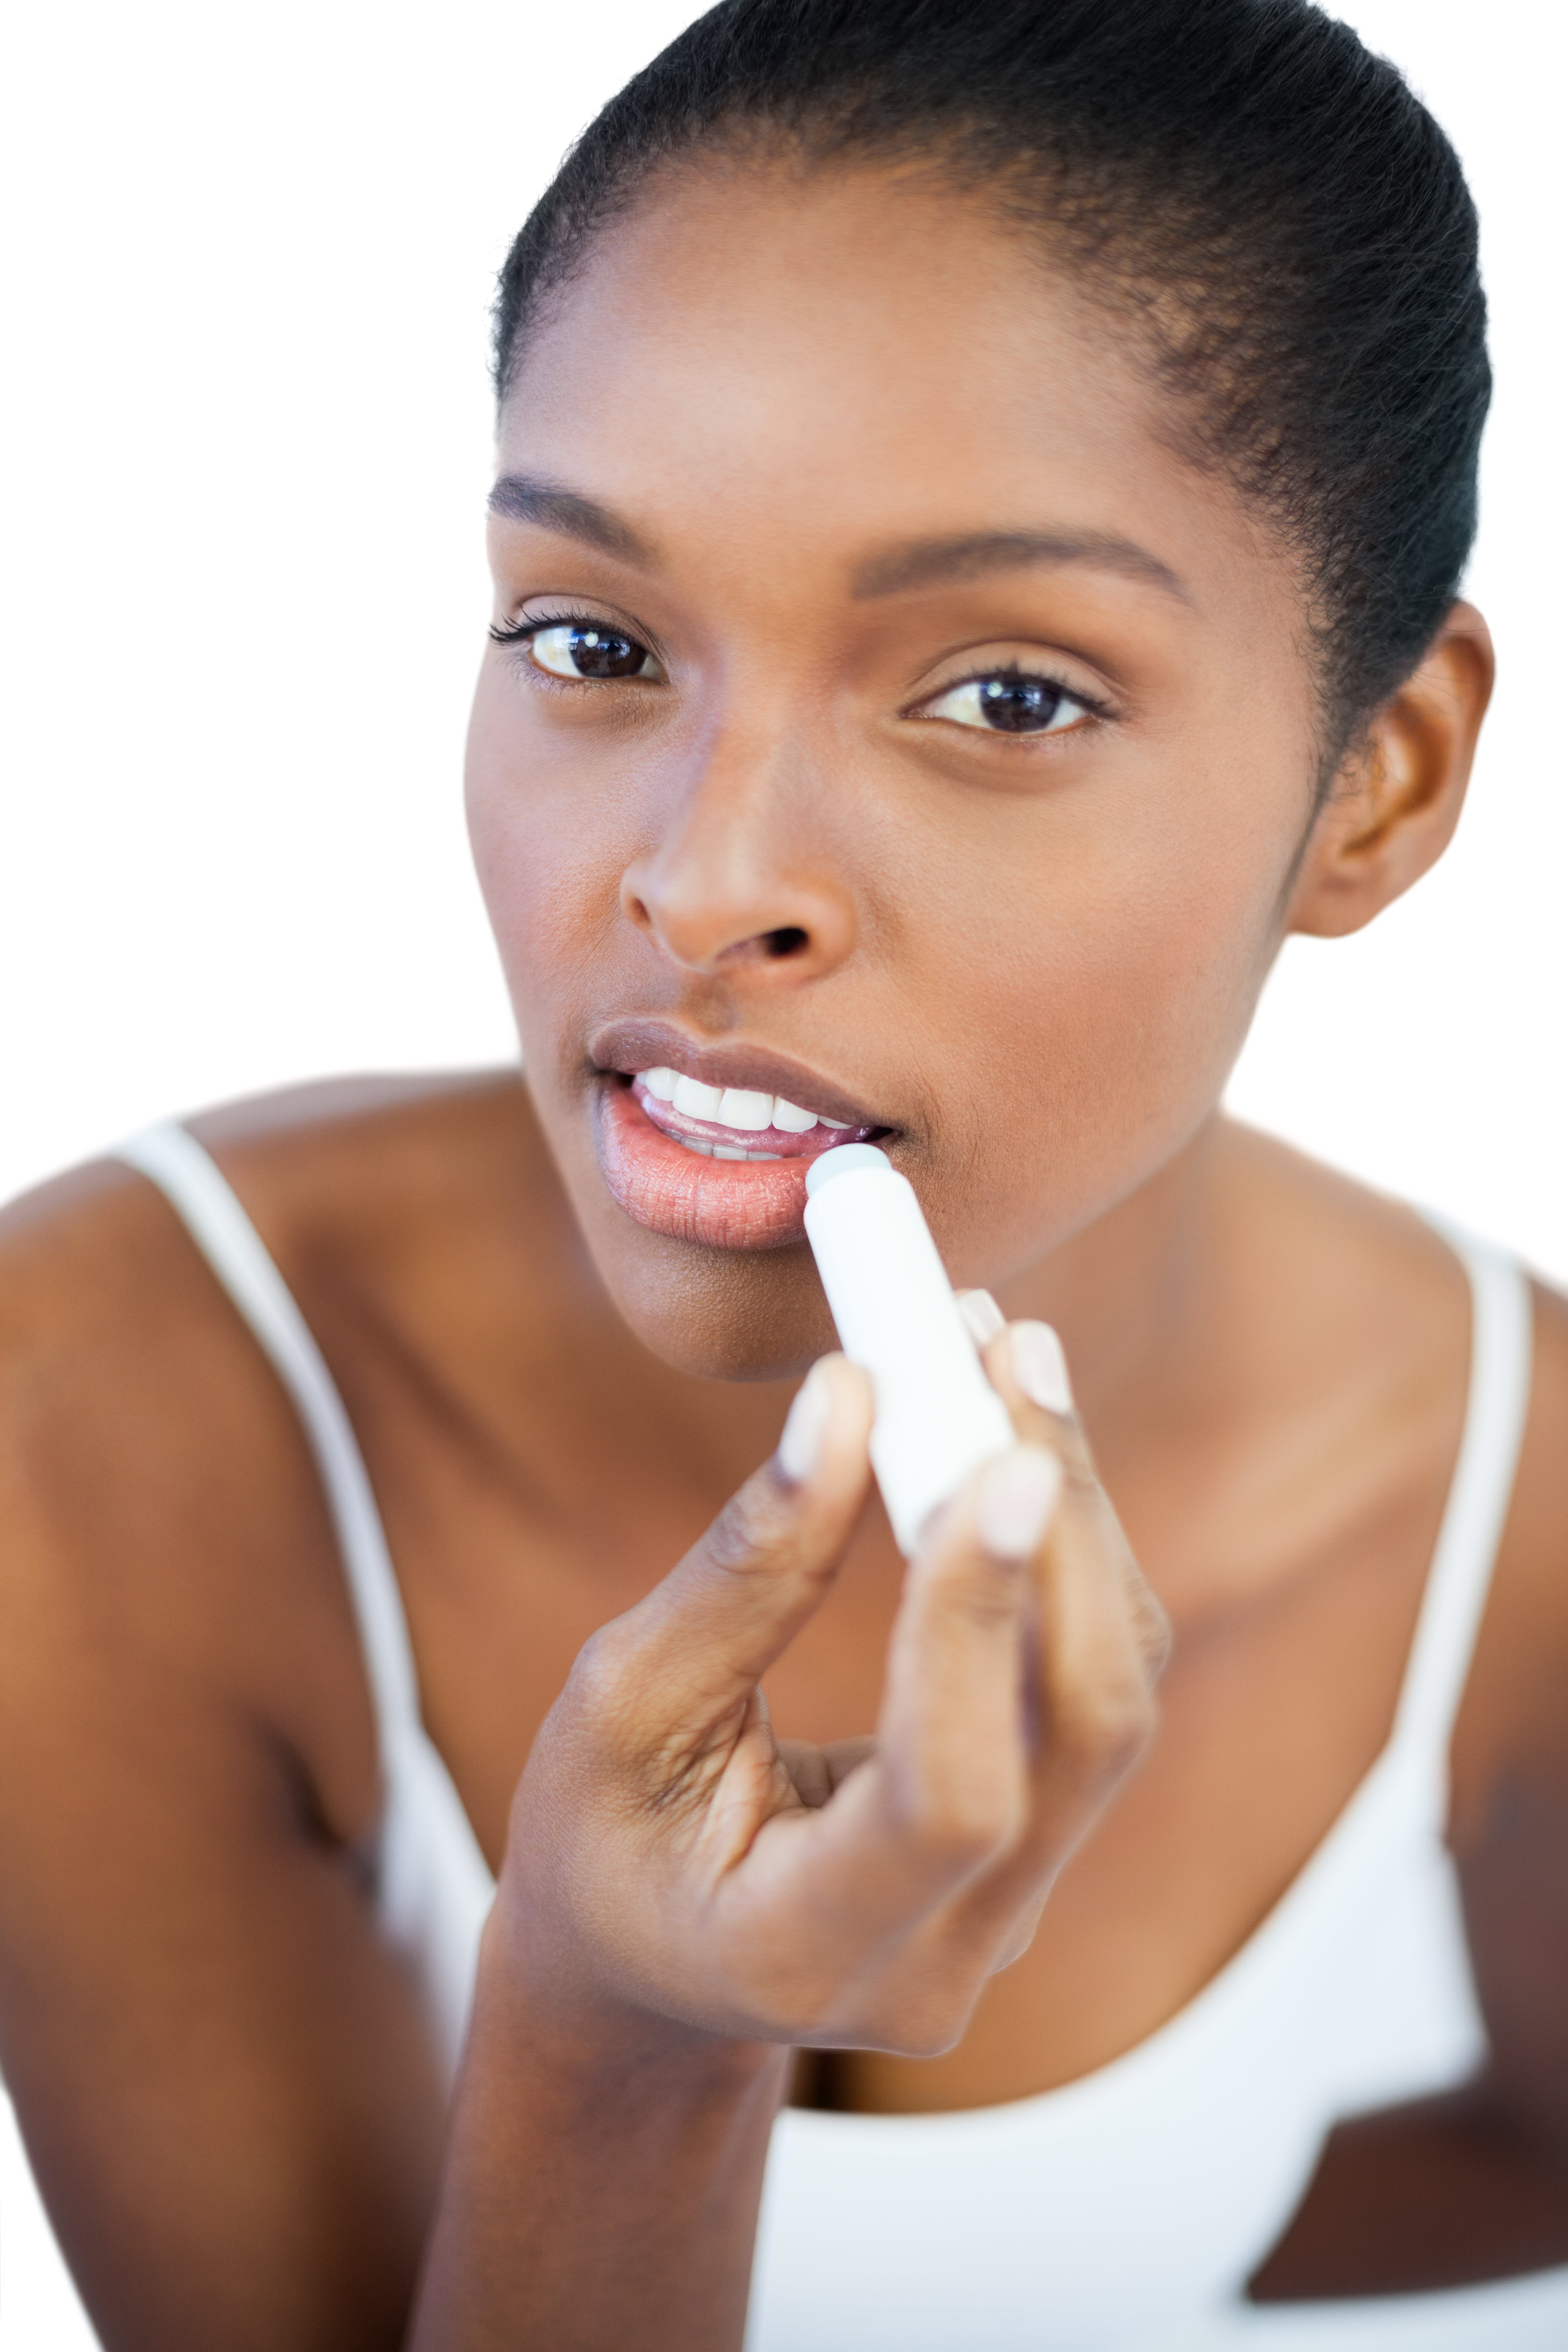 The 7 Best Anti-Aging Lip Treatments